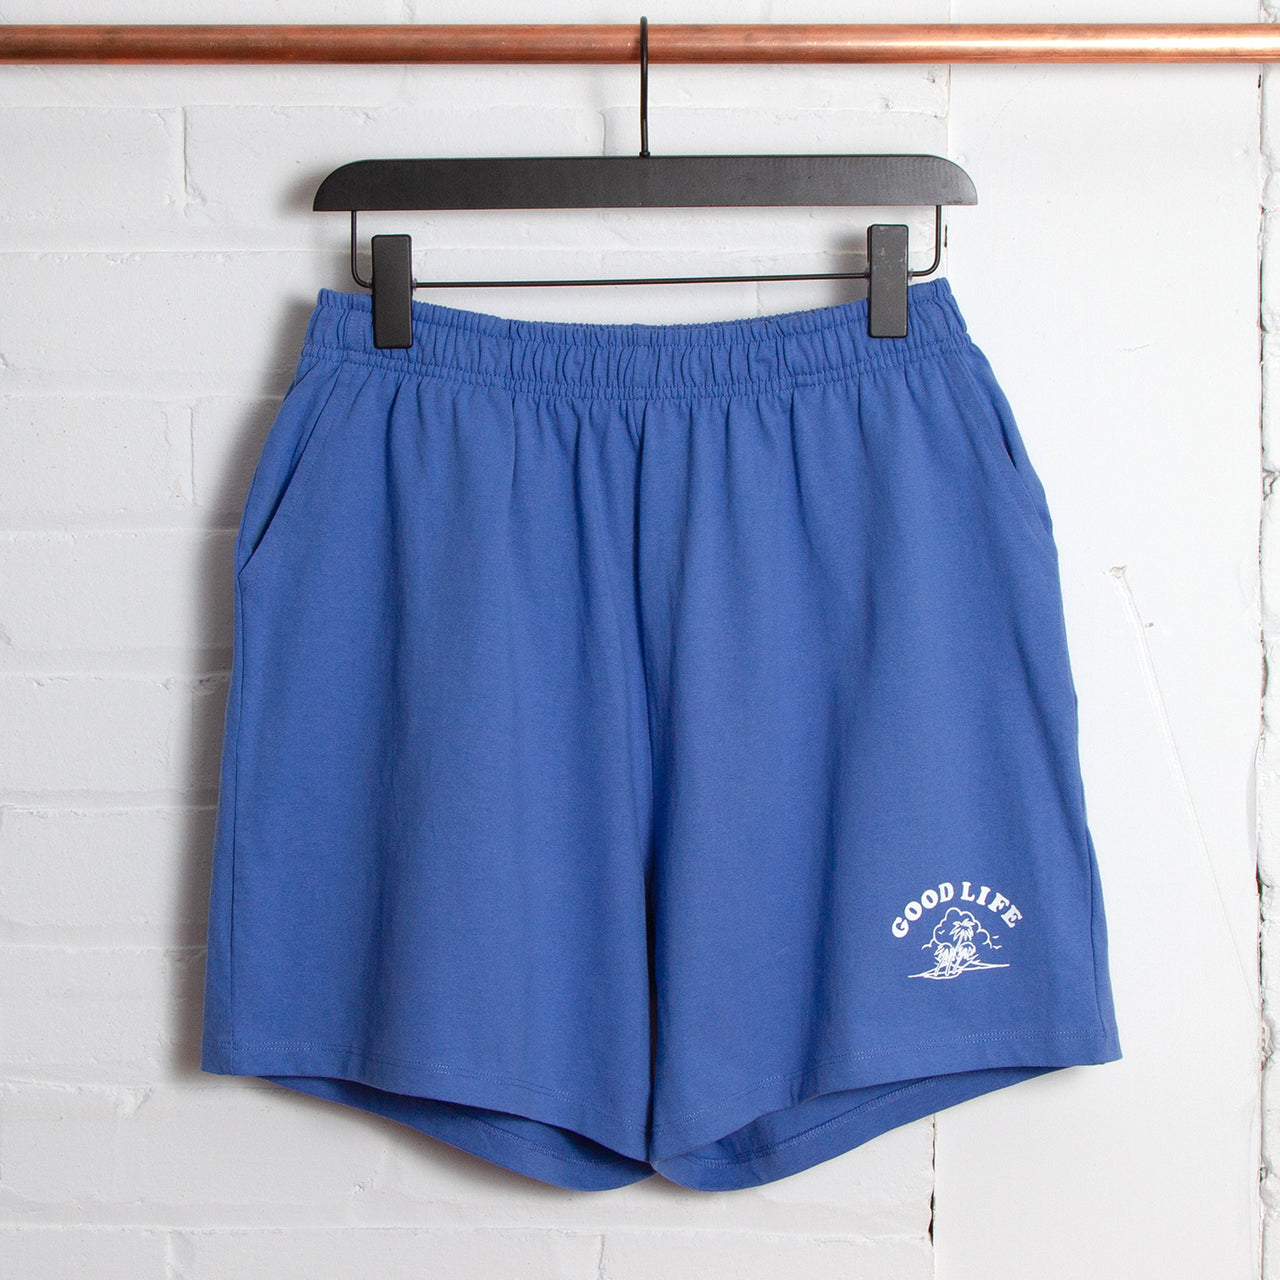 Good Life - Jersey Shorts - Bright Blue